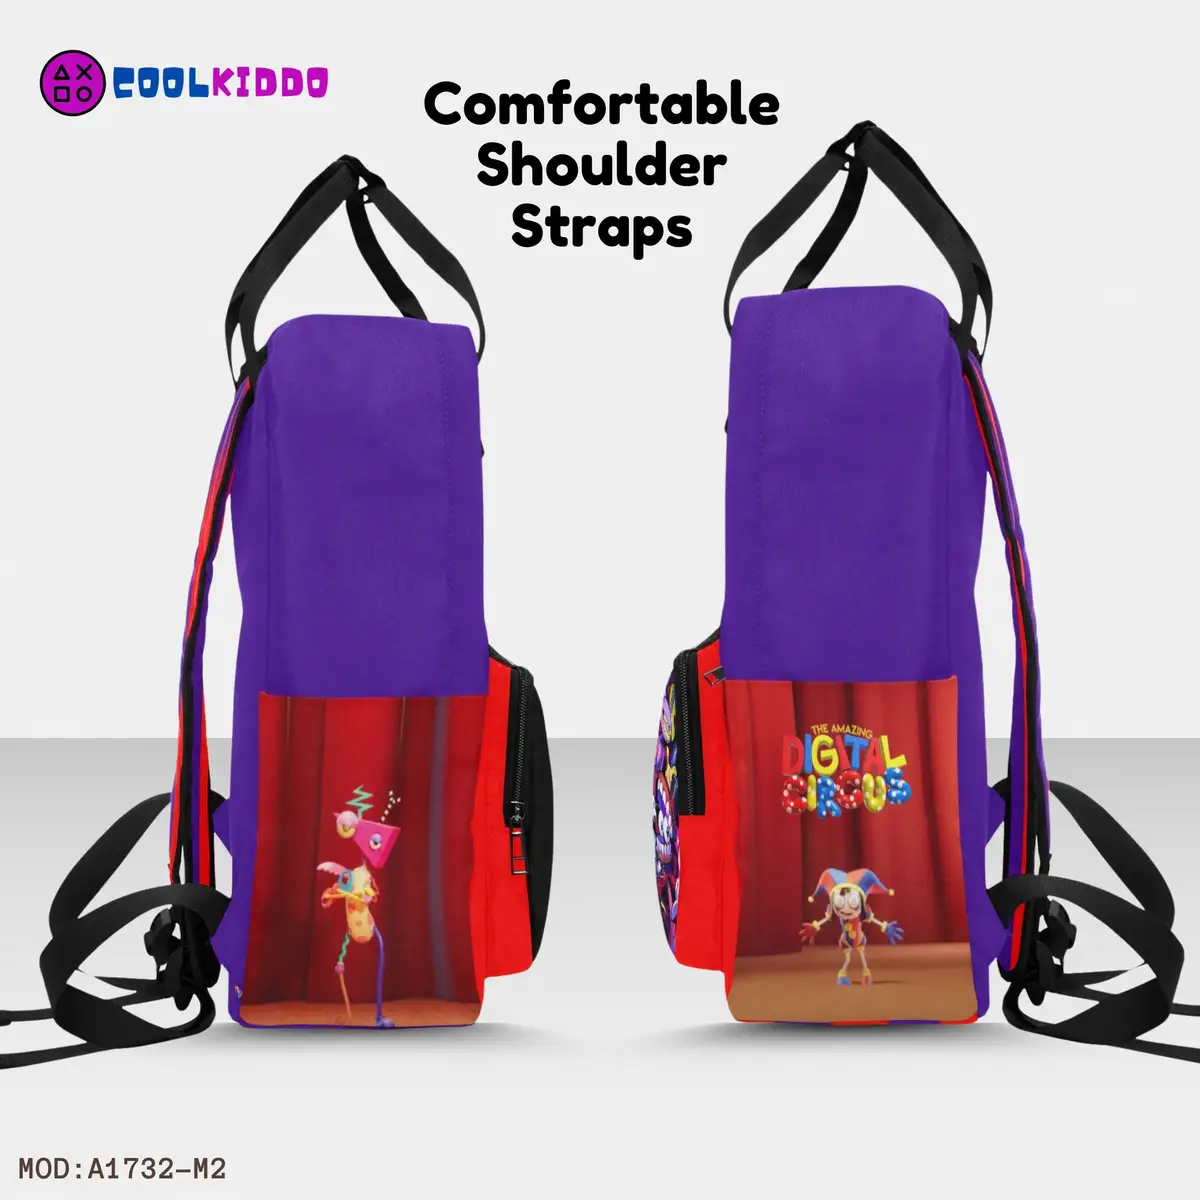 Amazing Digital Circus Handle Backpack. Book bag for Kids / Youth Cool Kiddo 16